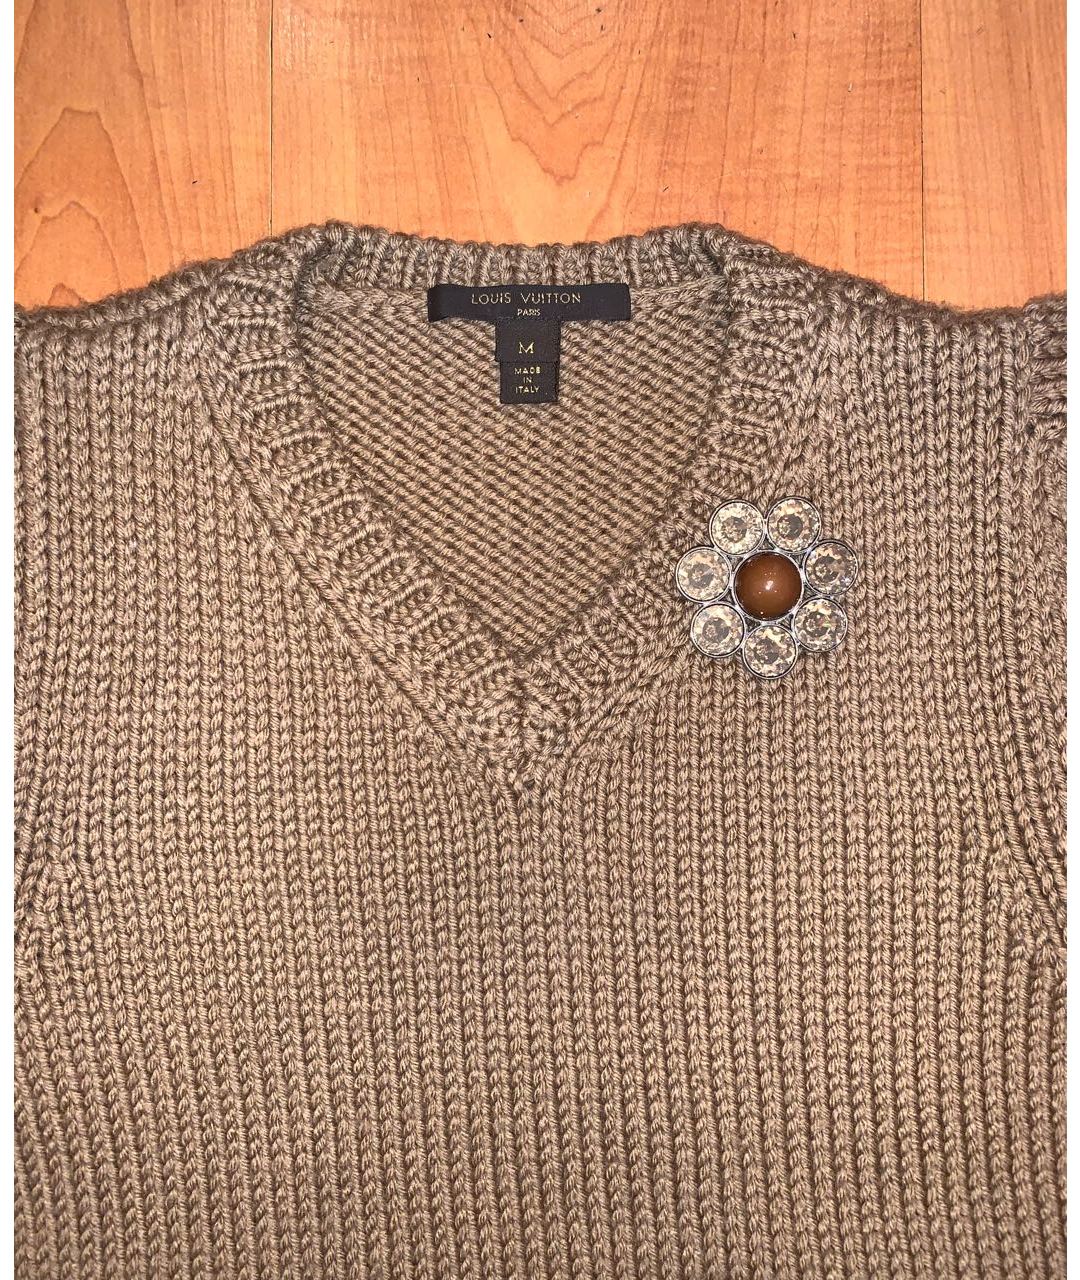 LOUIS VUITTON PRE-OWNED Коричневый шерстяной джемпер / свитер, фото 3